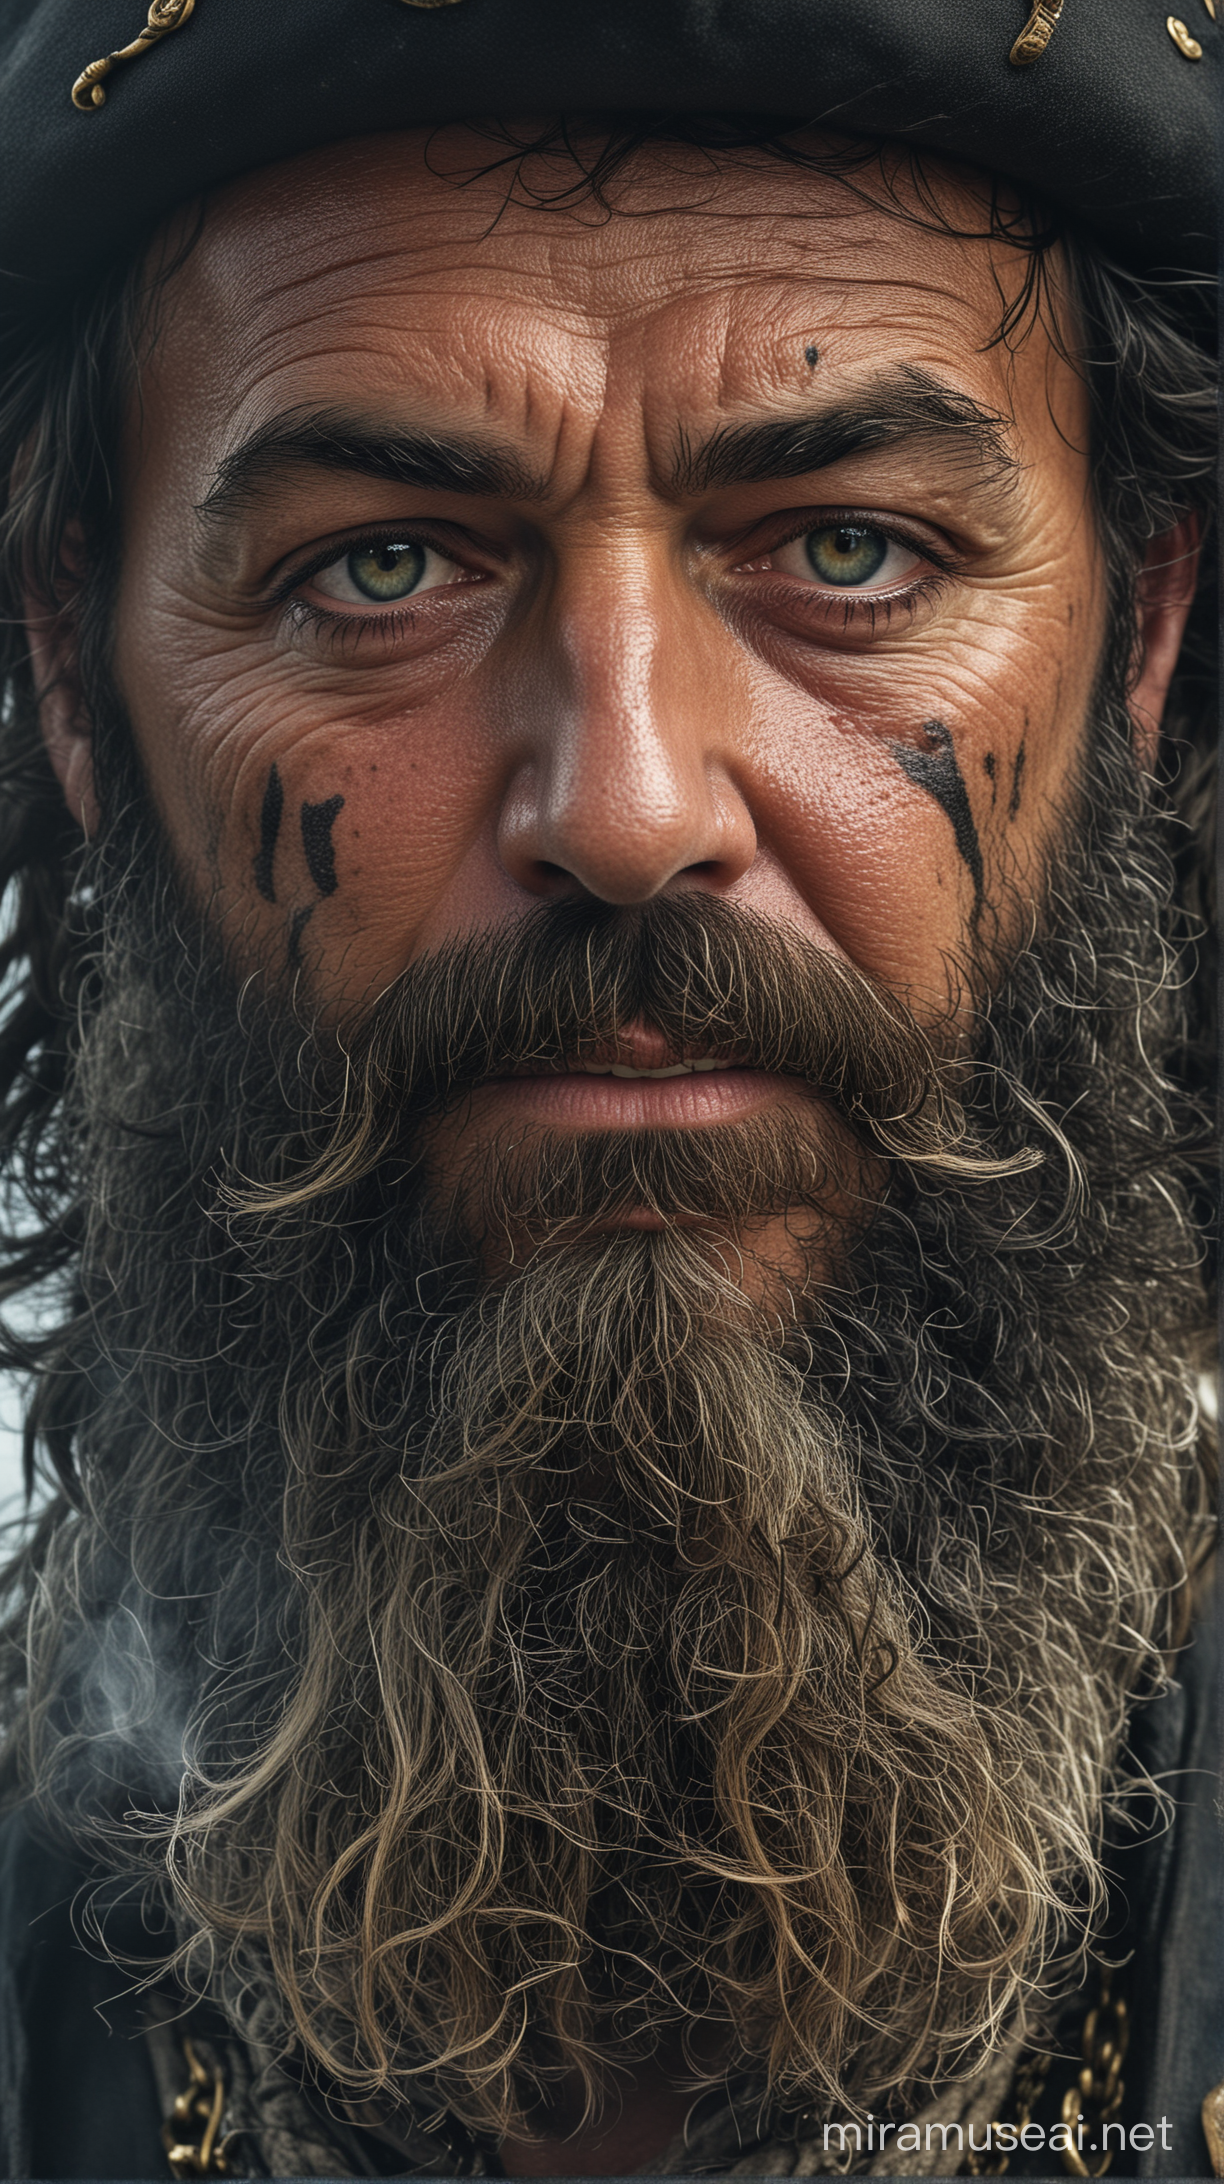 Intense CloseUp Portrait of Blackbeard with Smoking Beard